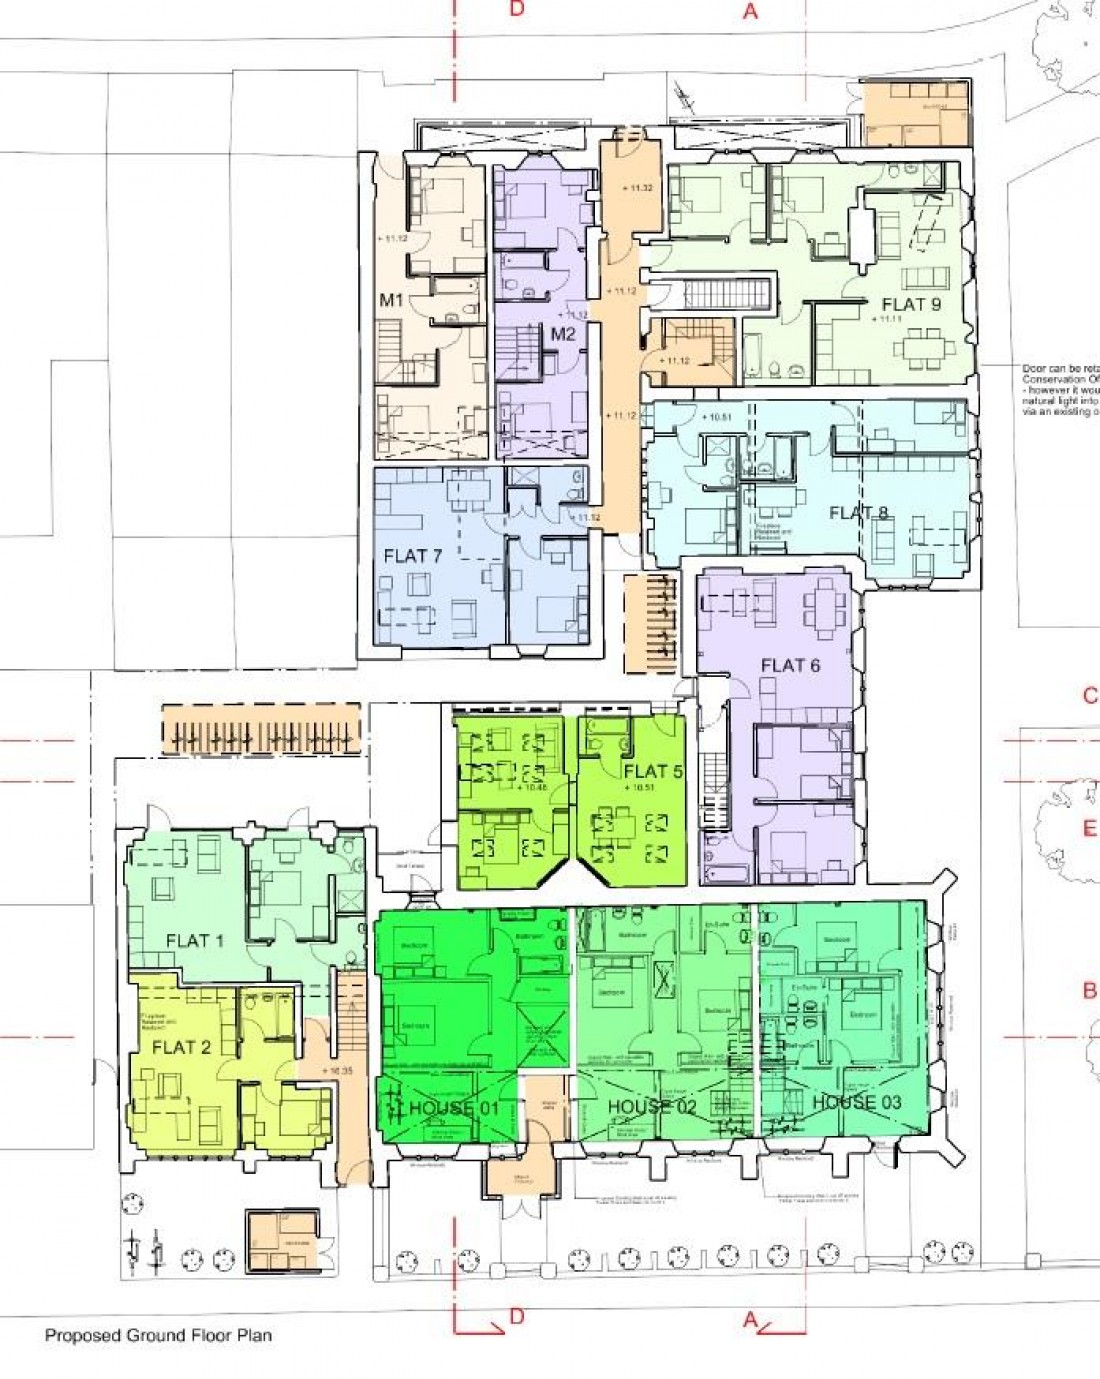 Floorplan for ST AGNES - PP GRANTED 23 RESI UNITS